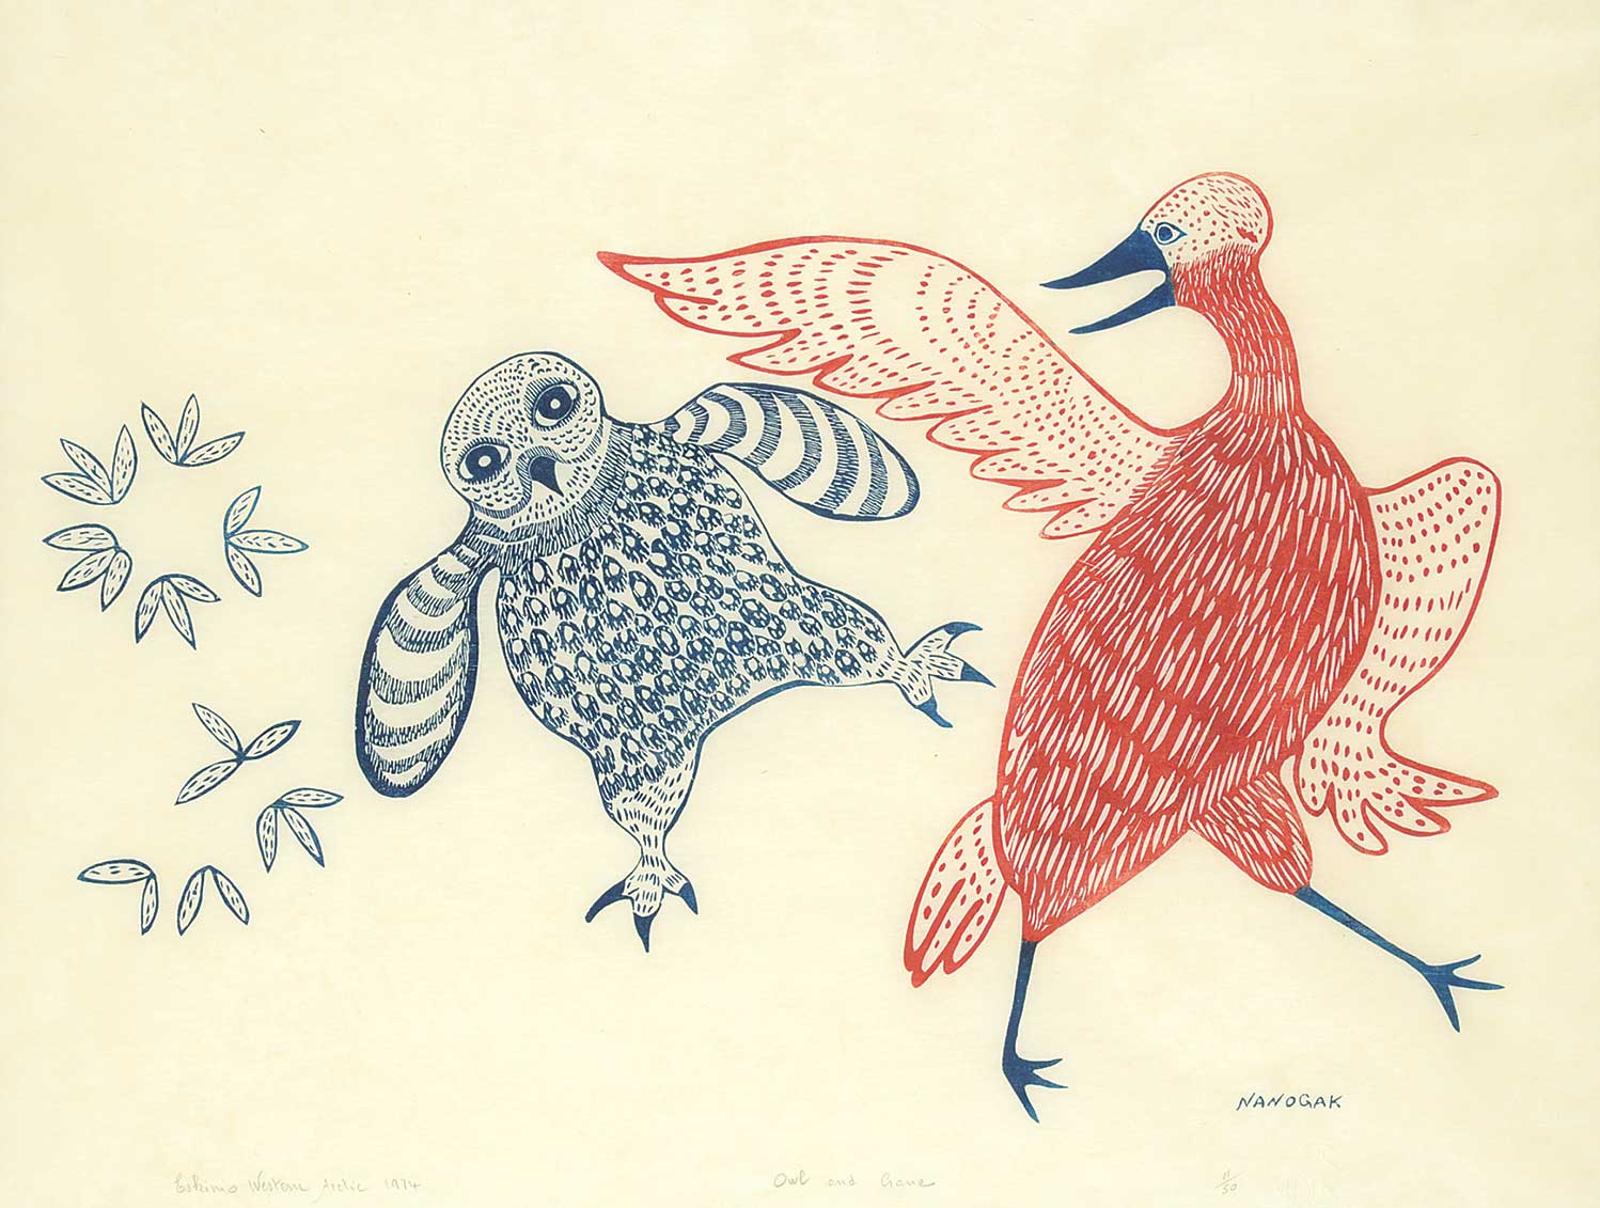 Nanogak - Owl and Crane  #11/50